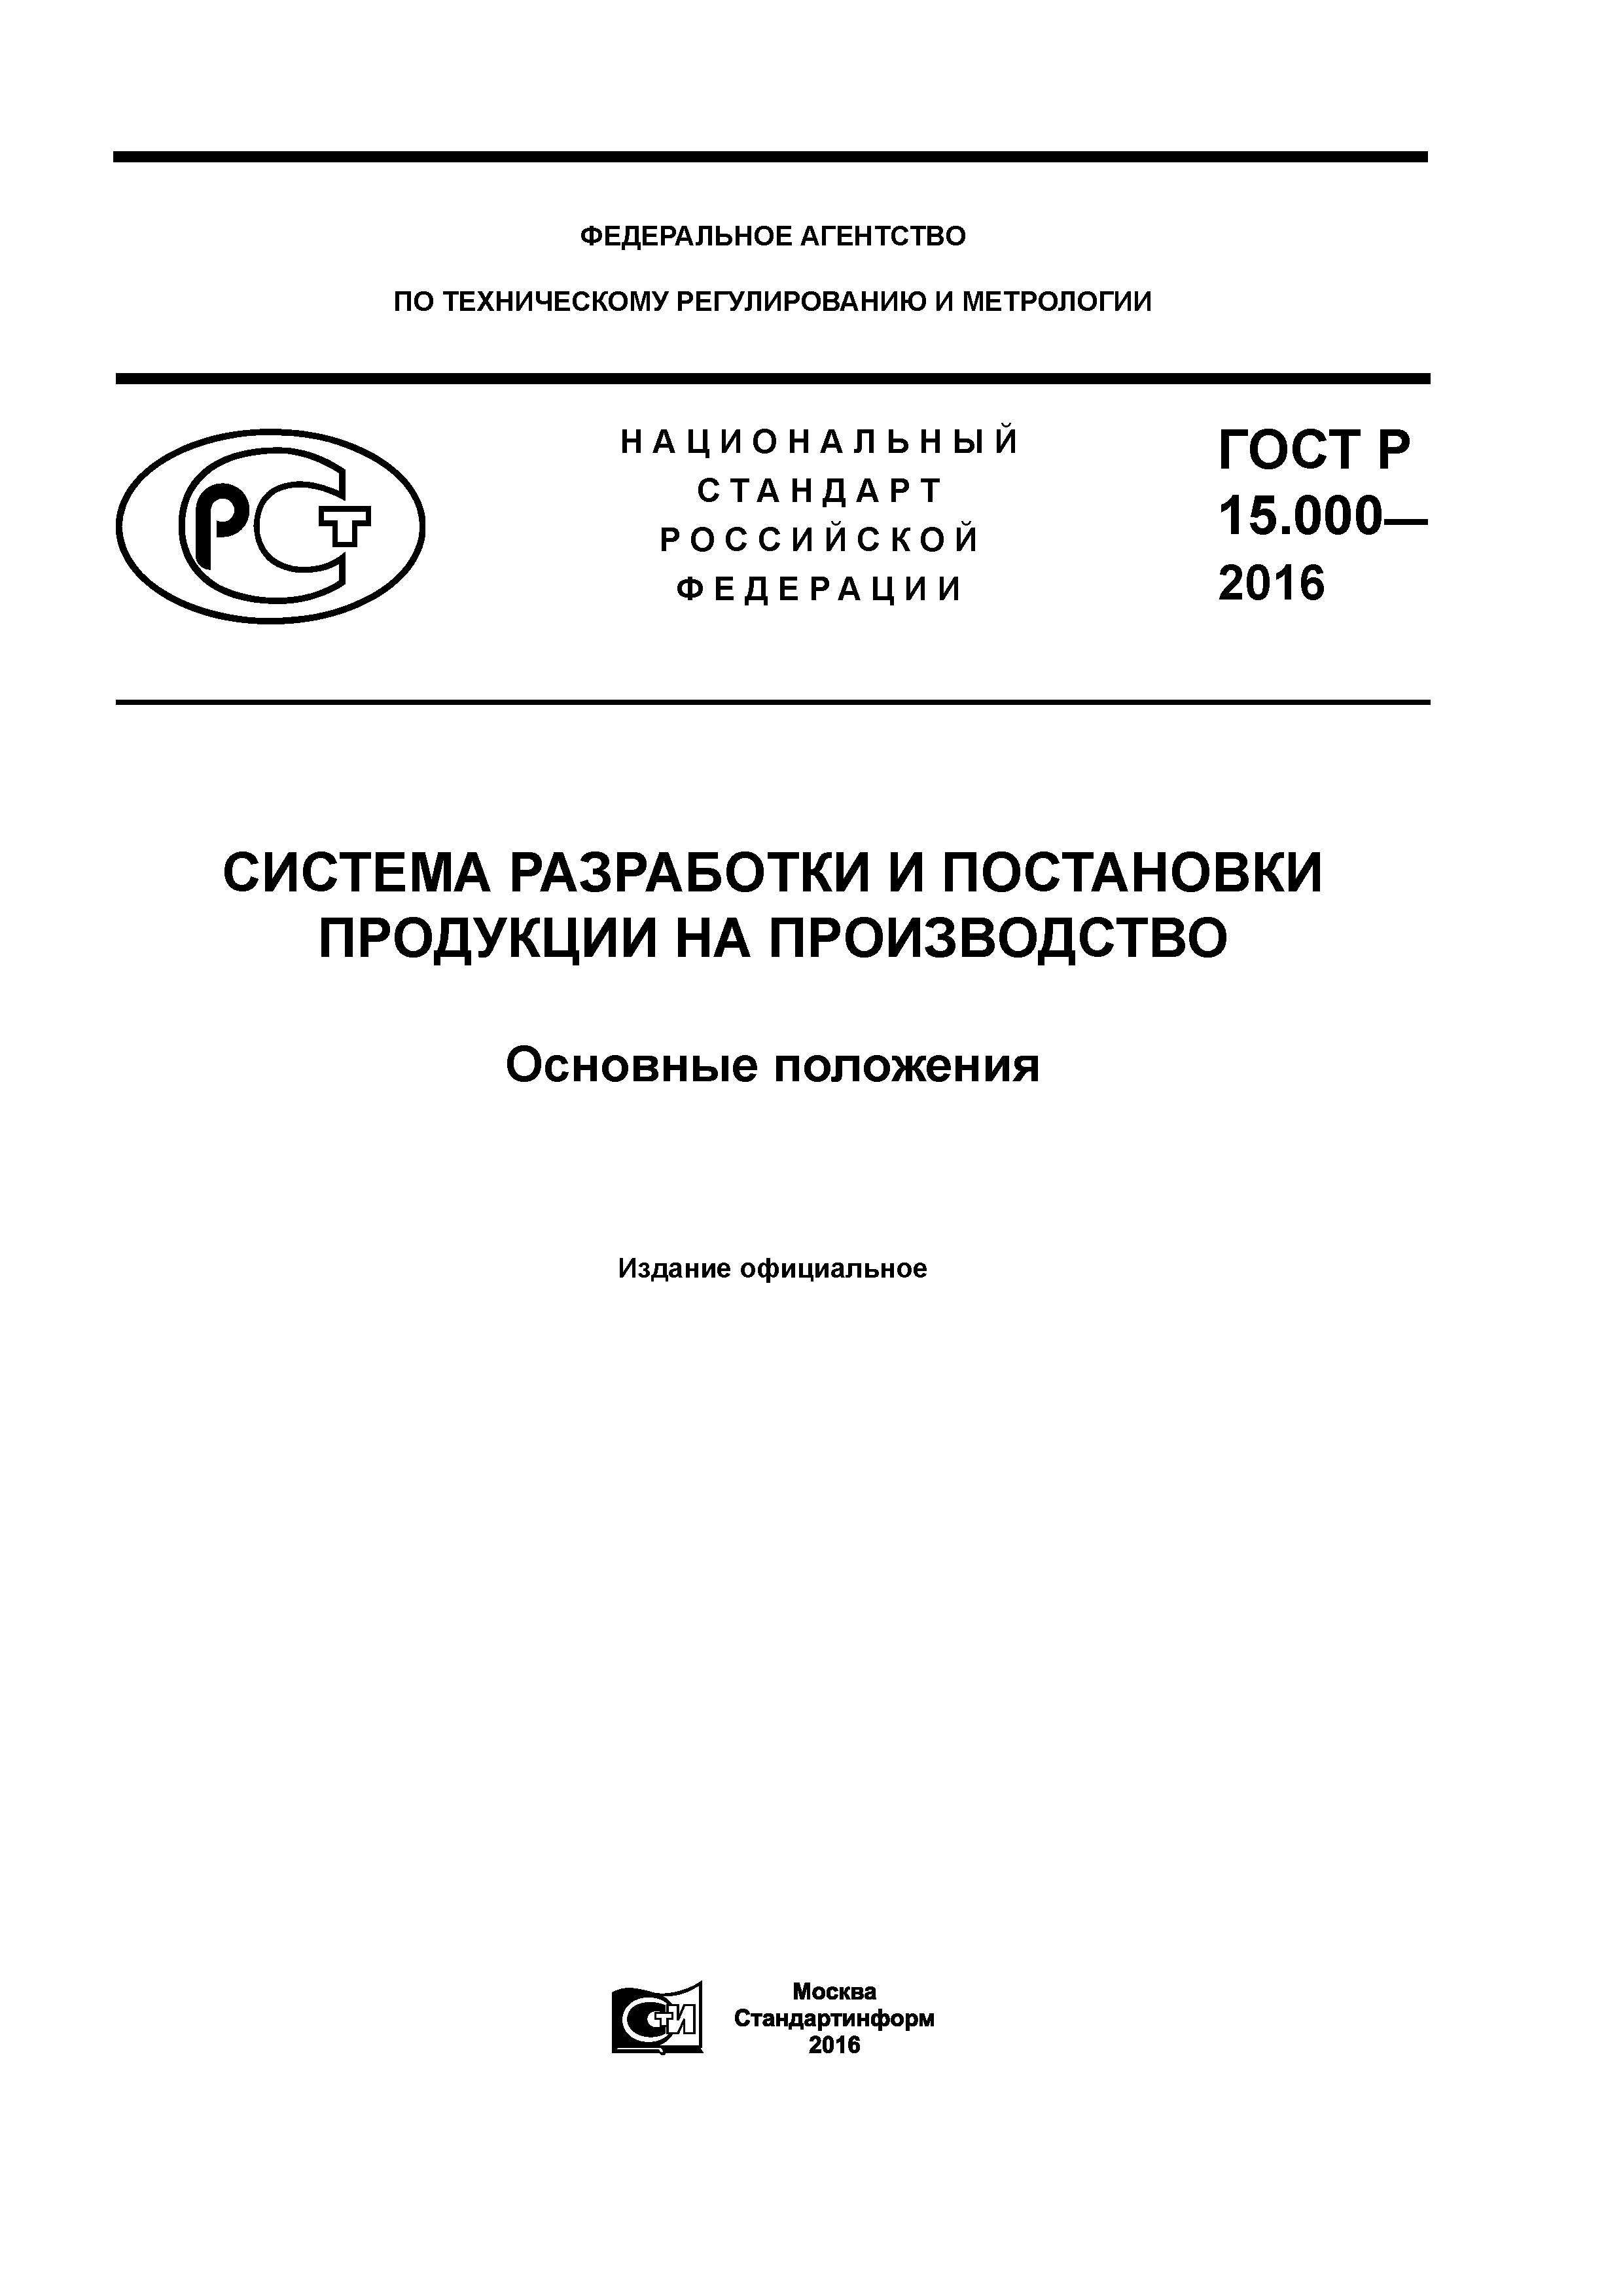 ГОСТ Р 15.000-2016